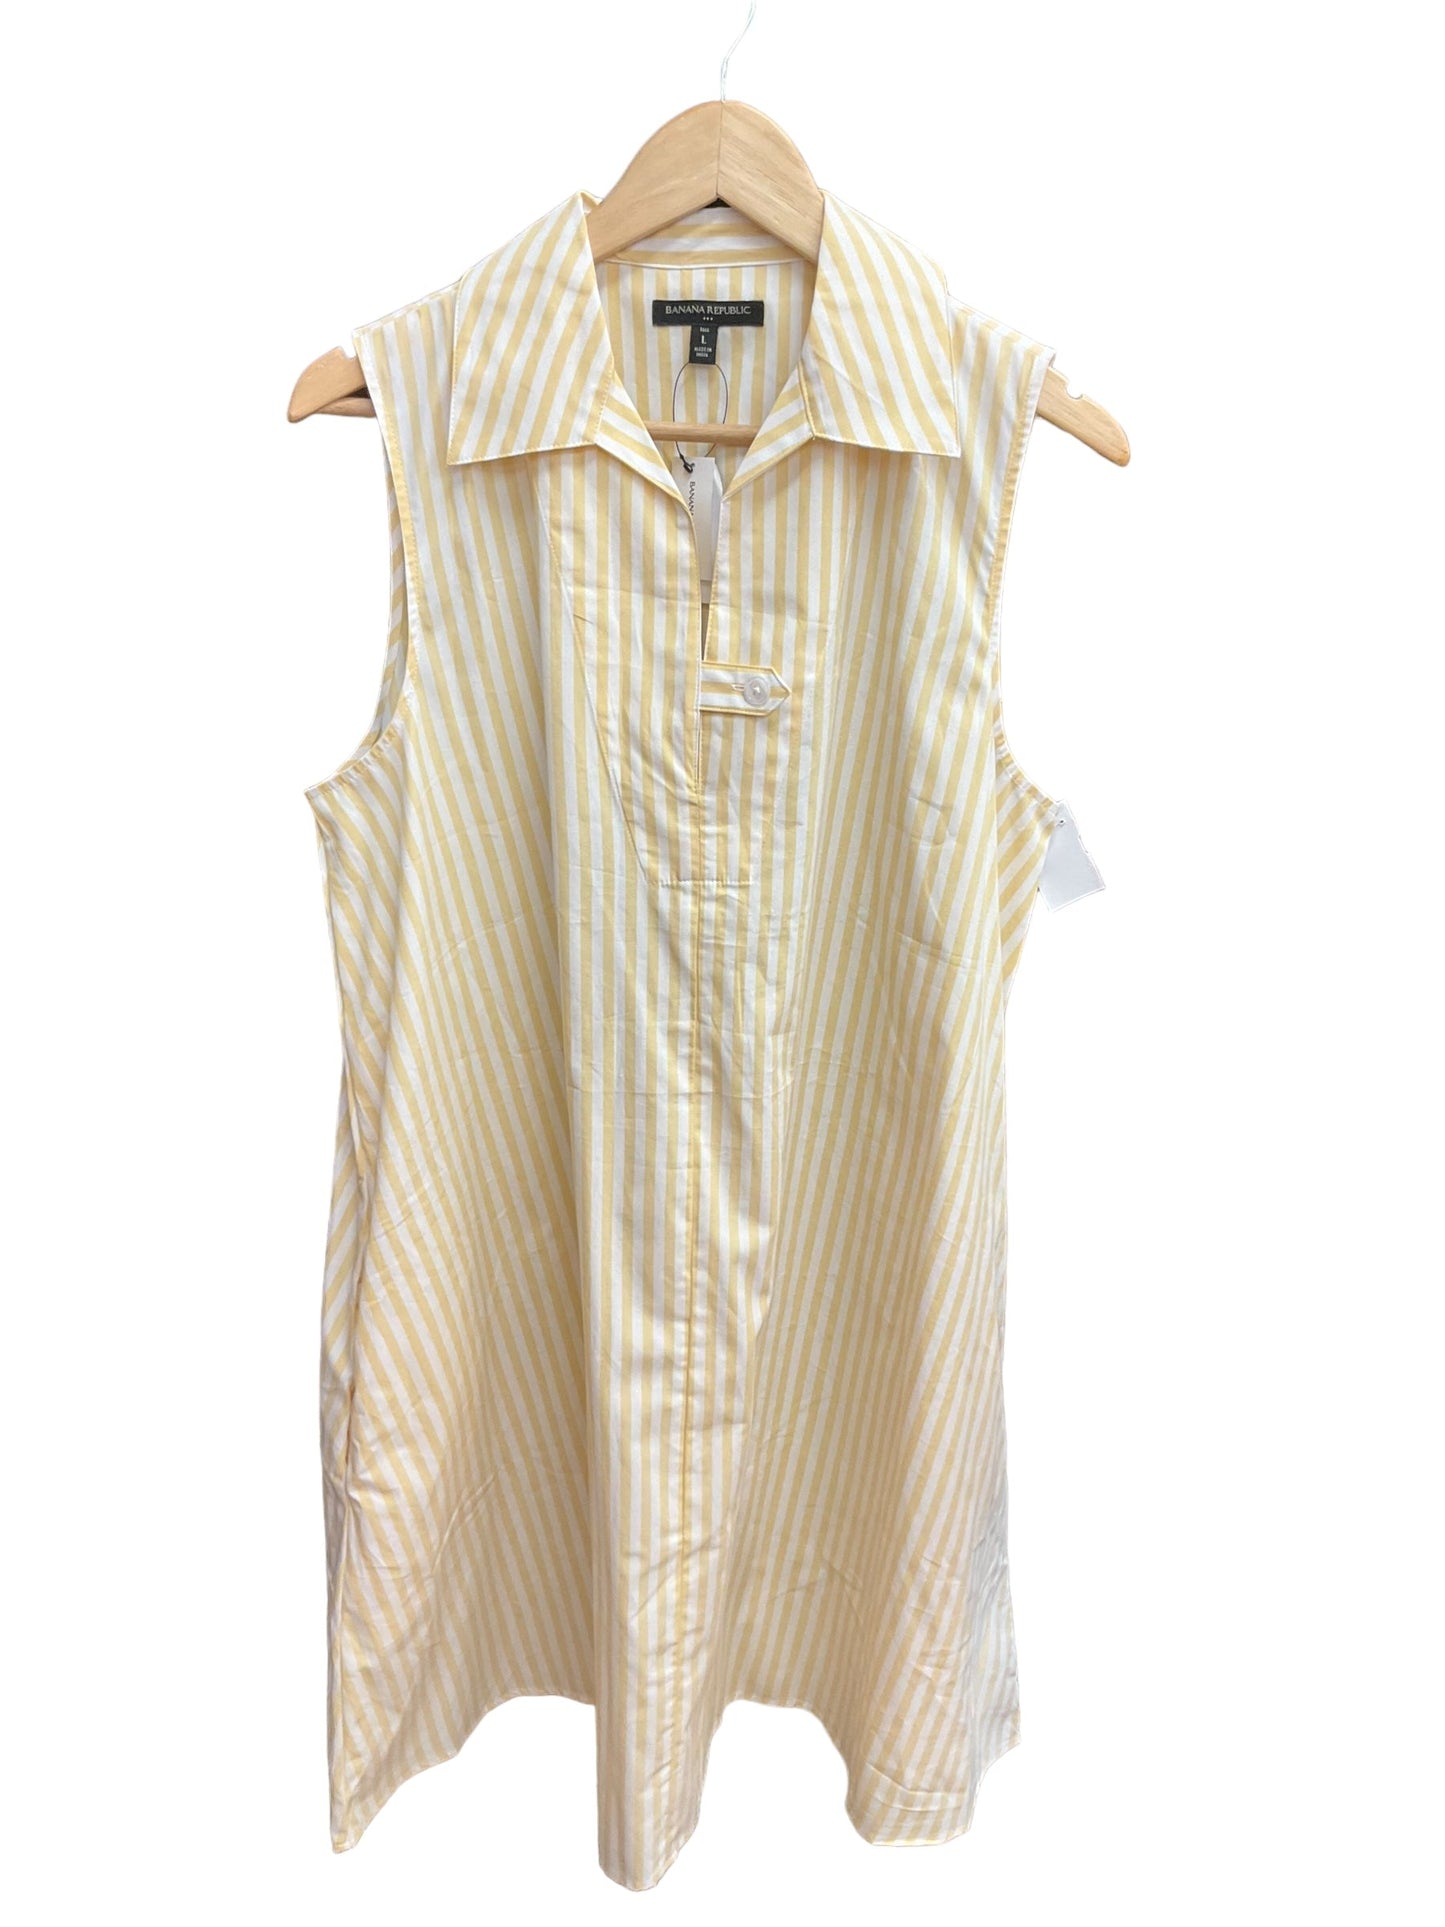 Striped Pattern Dress Casual Short Banana Republic, Size L